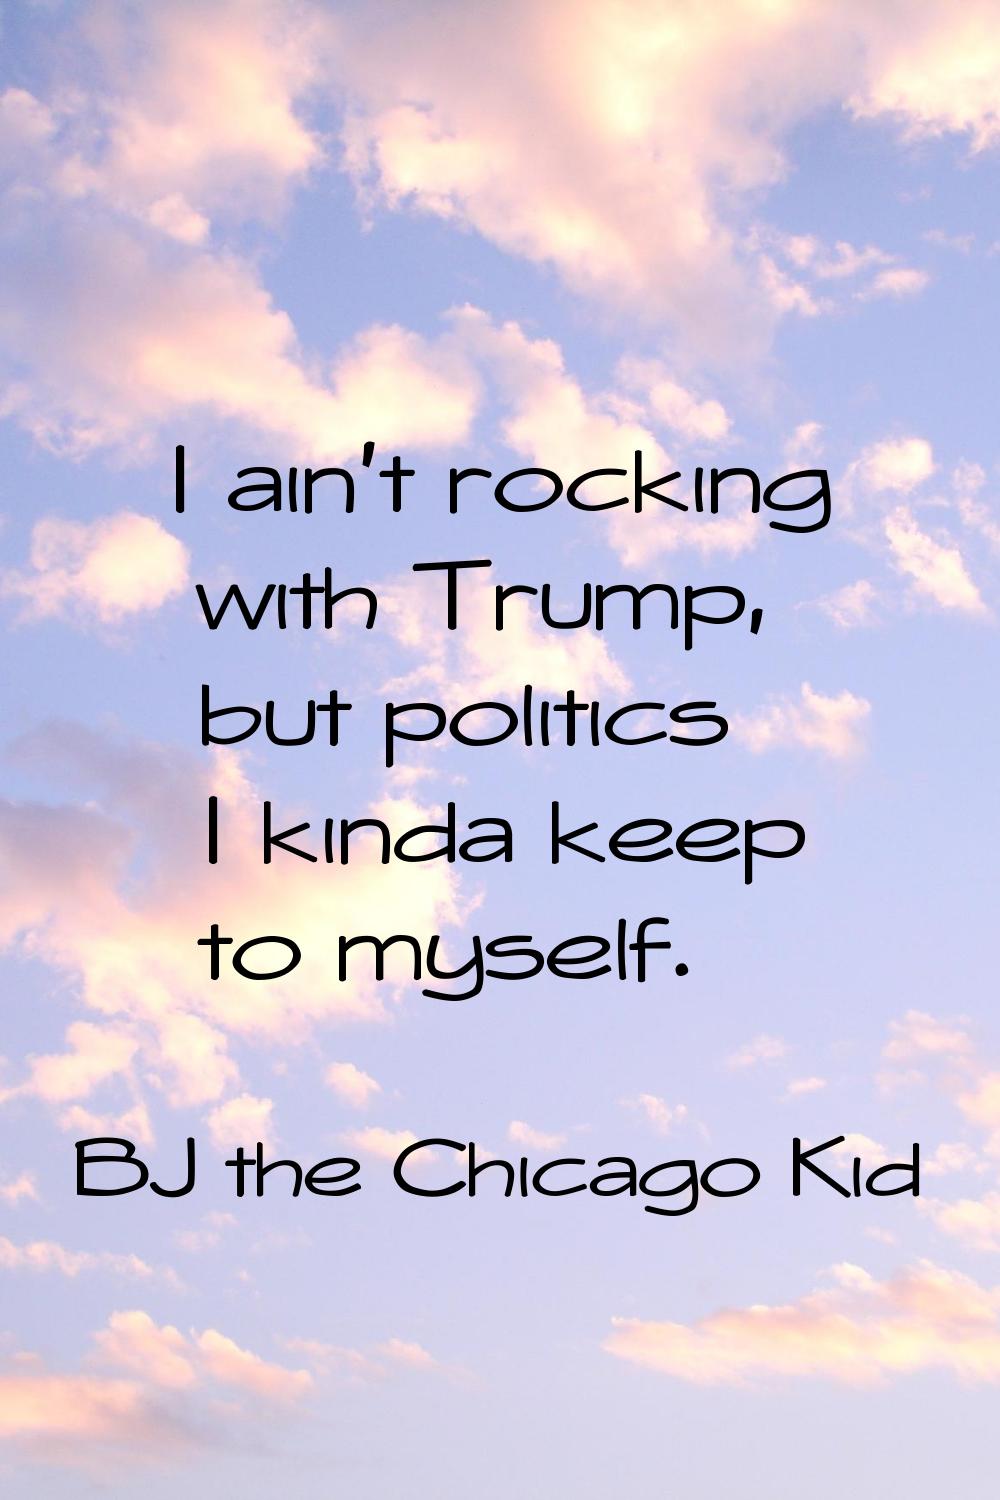 I ain't rocking with Trump, but politics I kinda keep to myself.